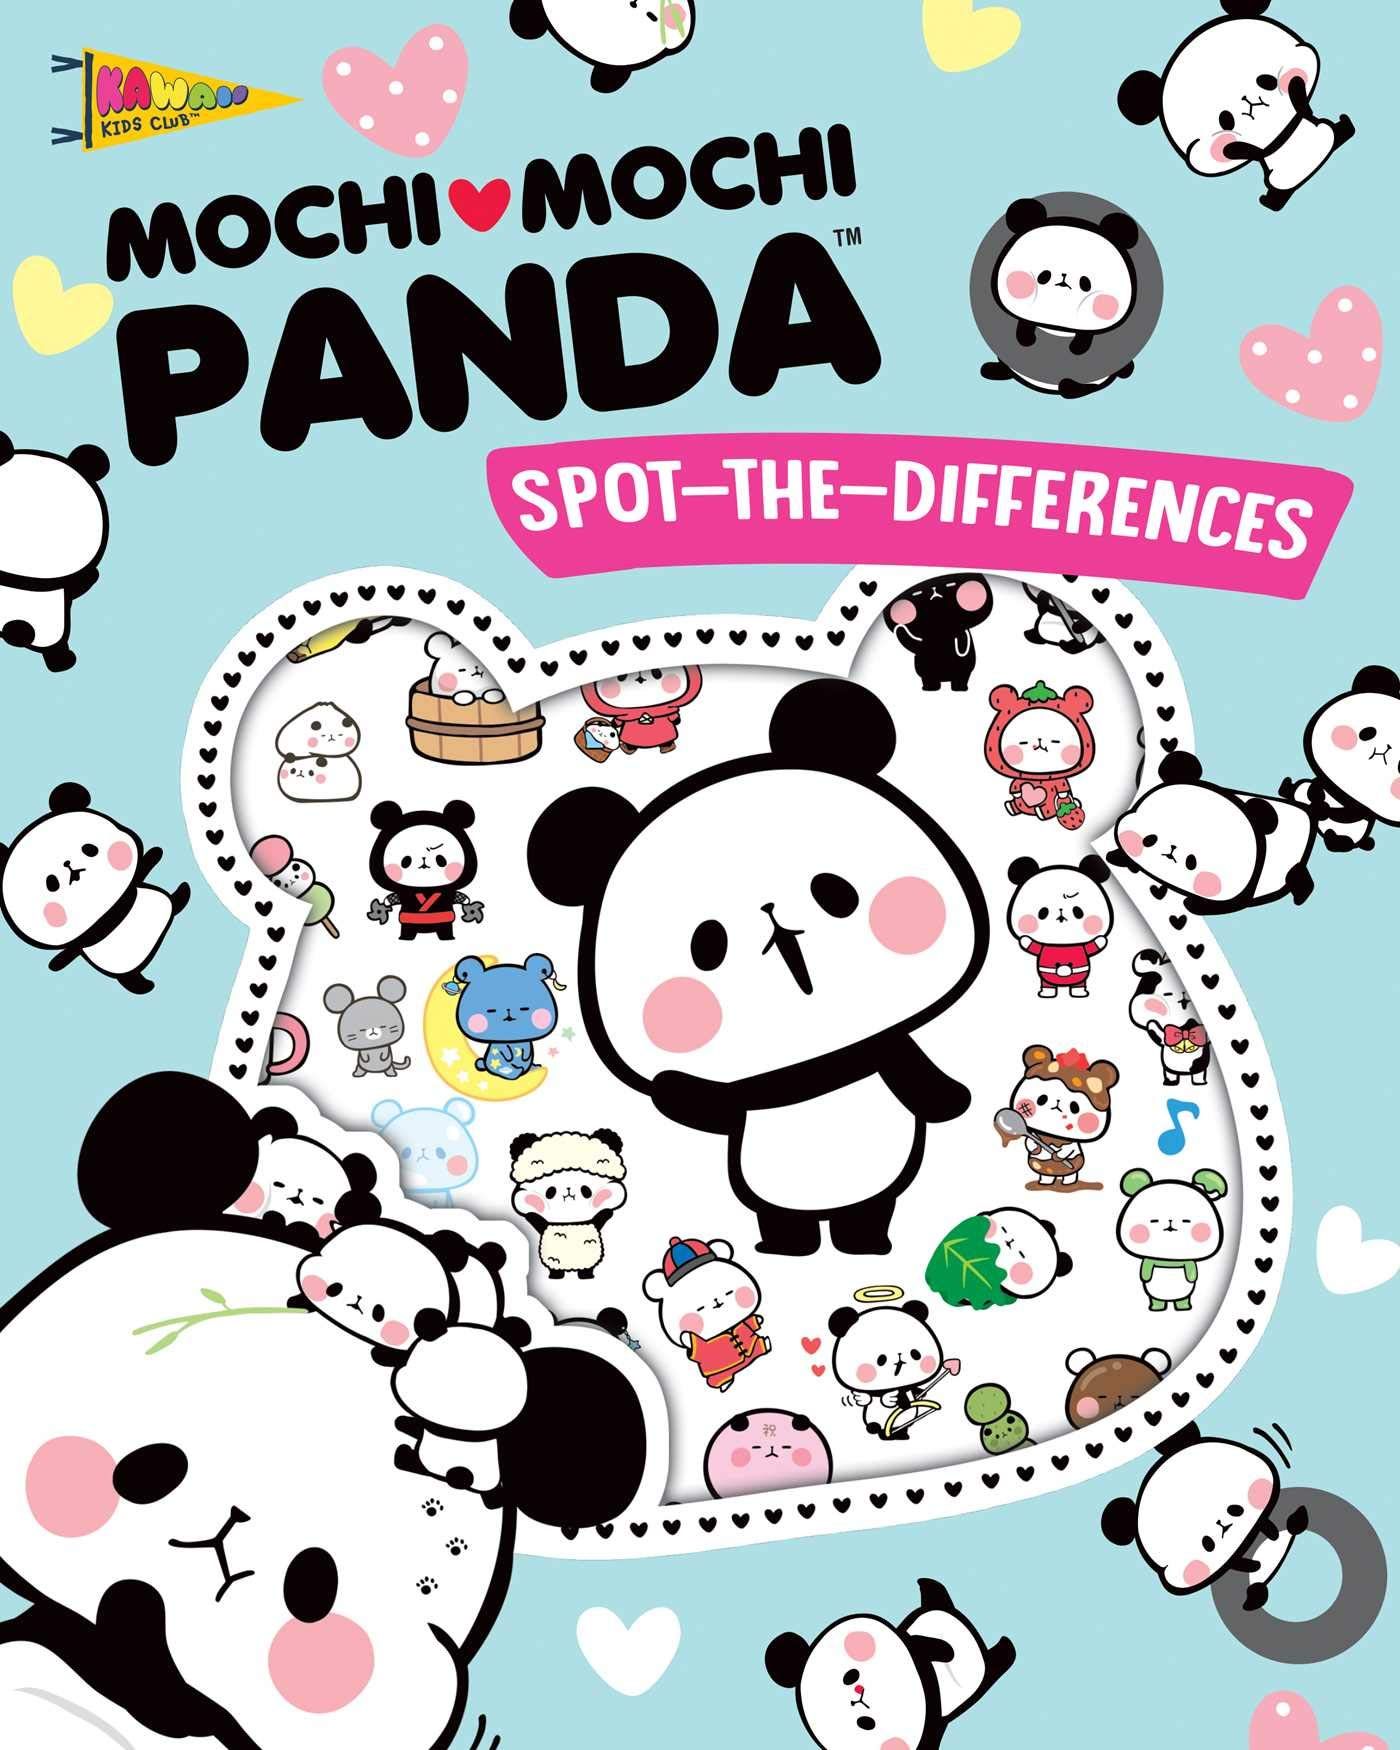 Mochi Mochi Panda Spot The Differences!: With Puffy Stickers! (Kawaii Kids Club): Gakken: 9784056211689: Books